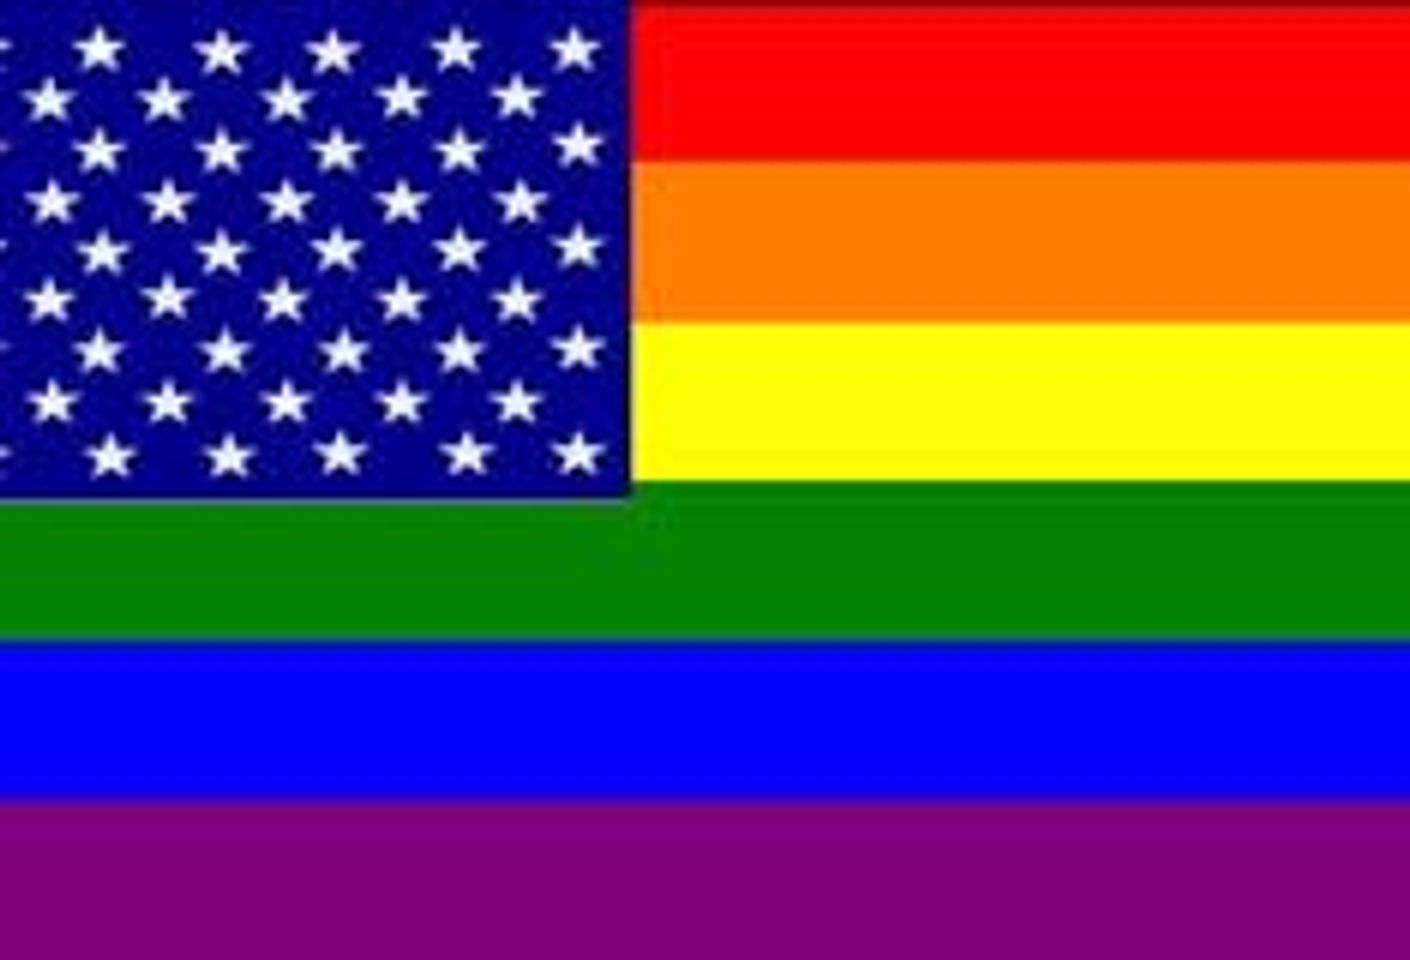 Cincinnati to Decide Fate of Anti-Gay Rights Ordinance